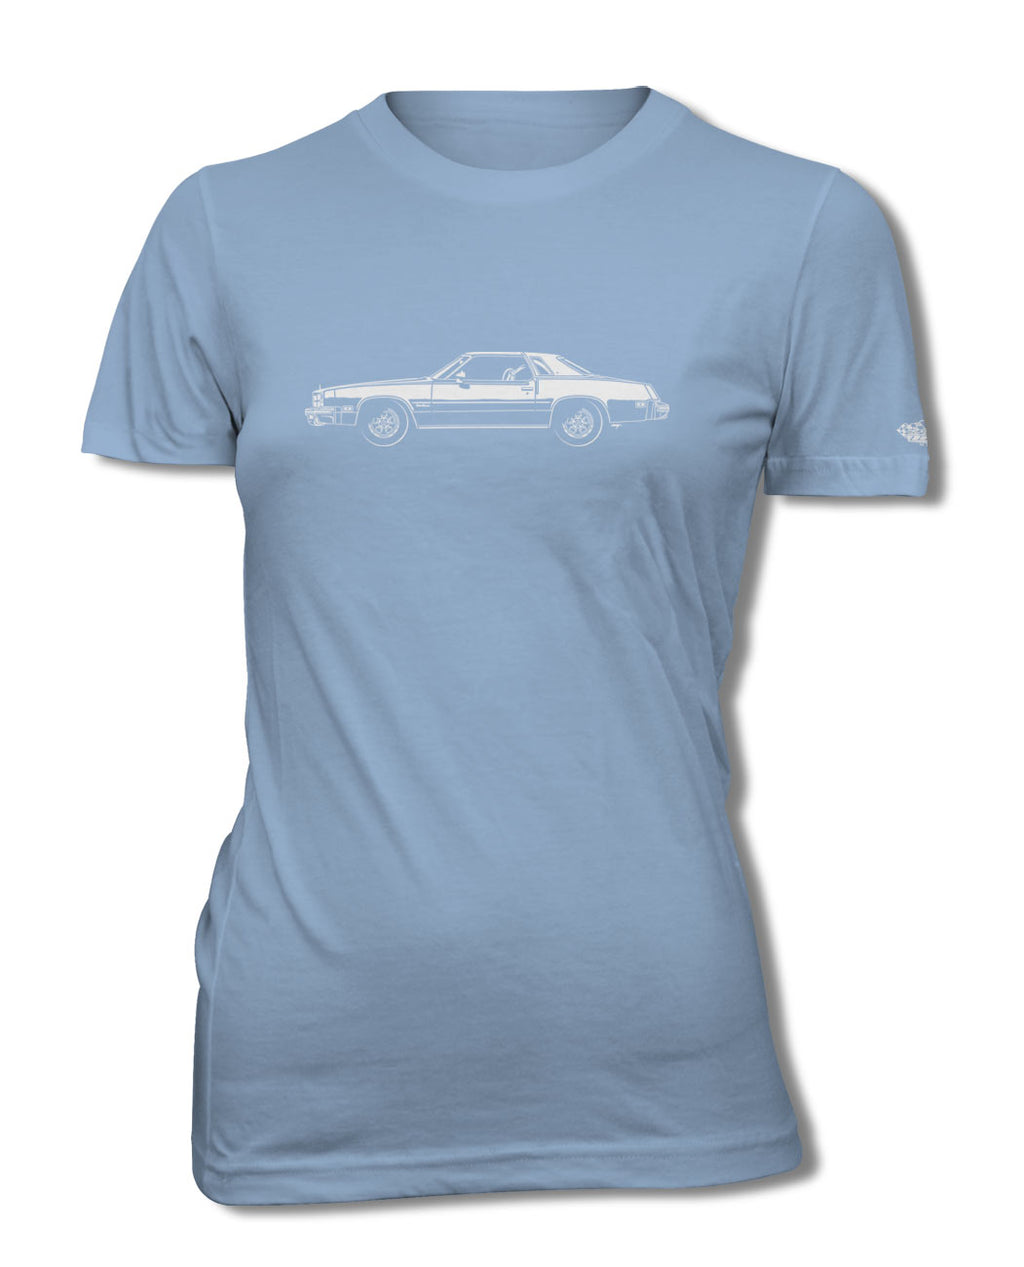 1976 Oldsmobile Cutlass Supreme Coupe T-Shirt - Women - Side View